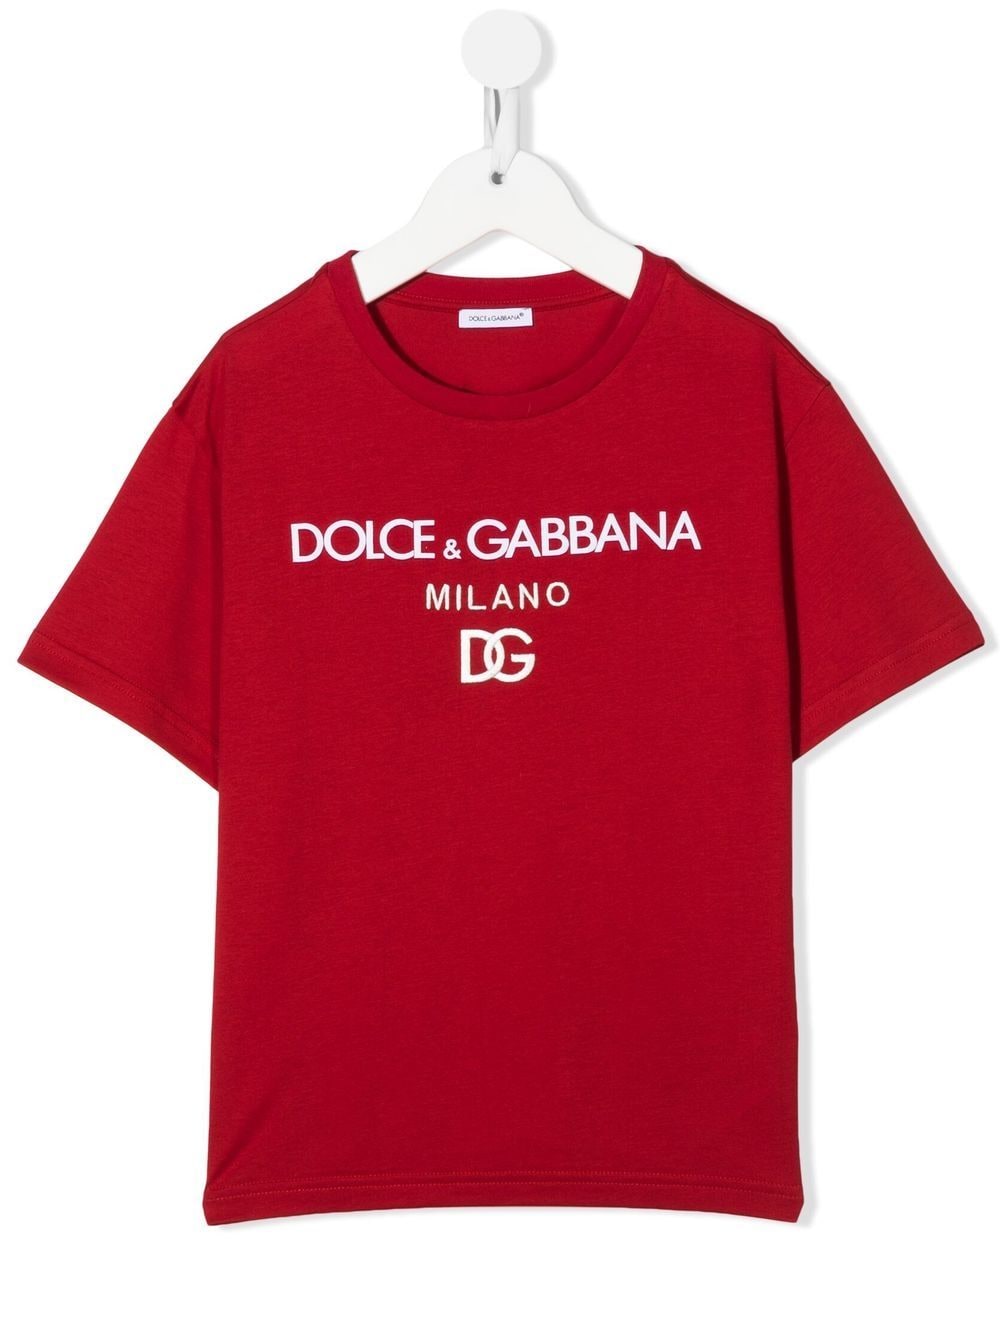 Dolce & Gabbana Kids ドルチェ＆ガッバーナキッズ DG Milano Tシャツ - Farfetch